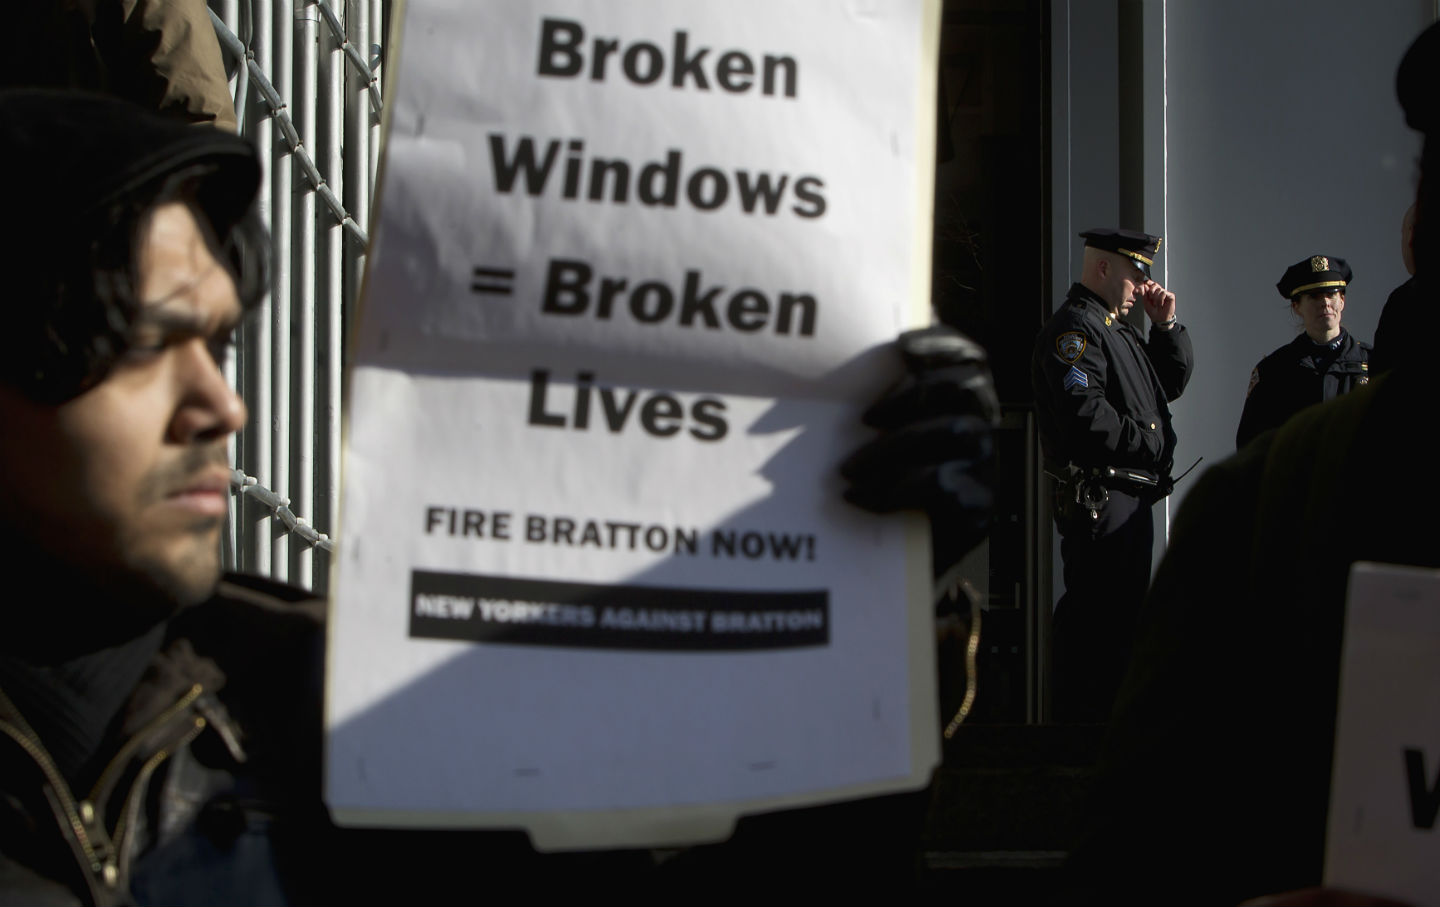 Protest against Broken Windows